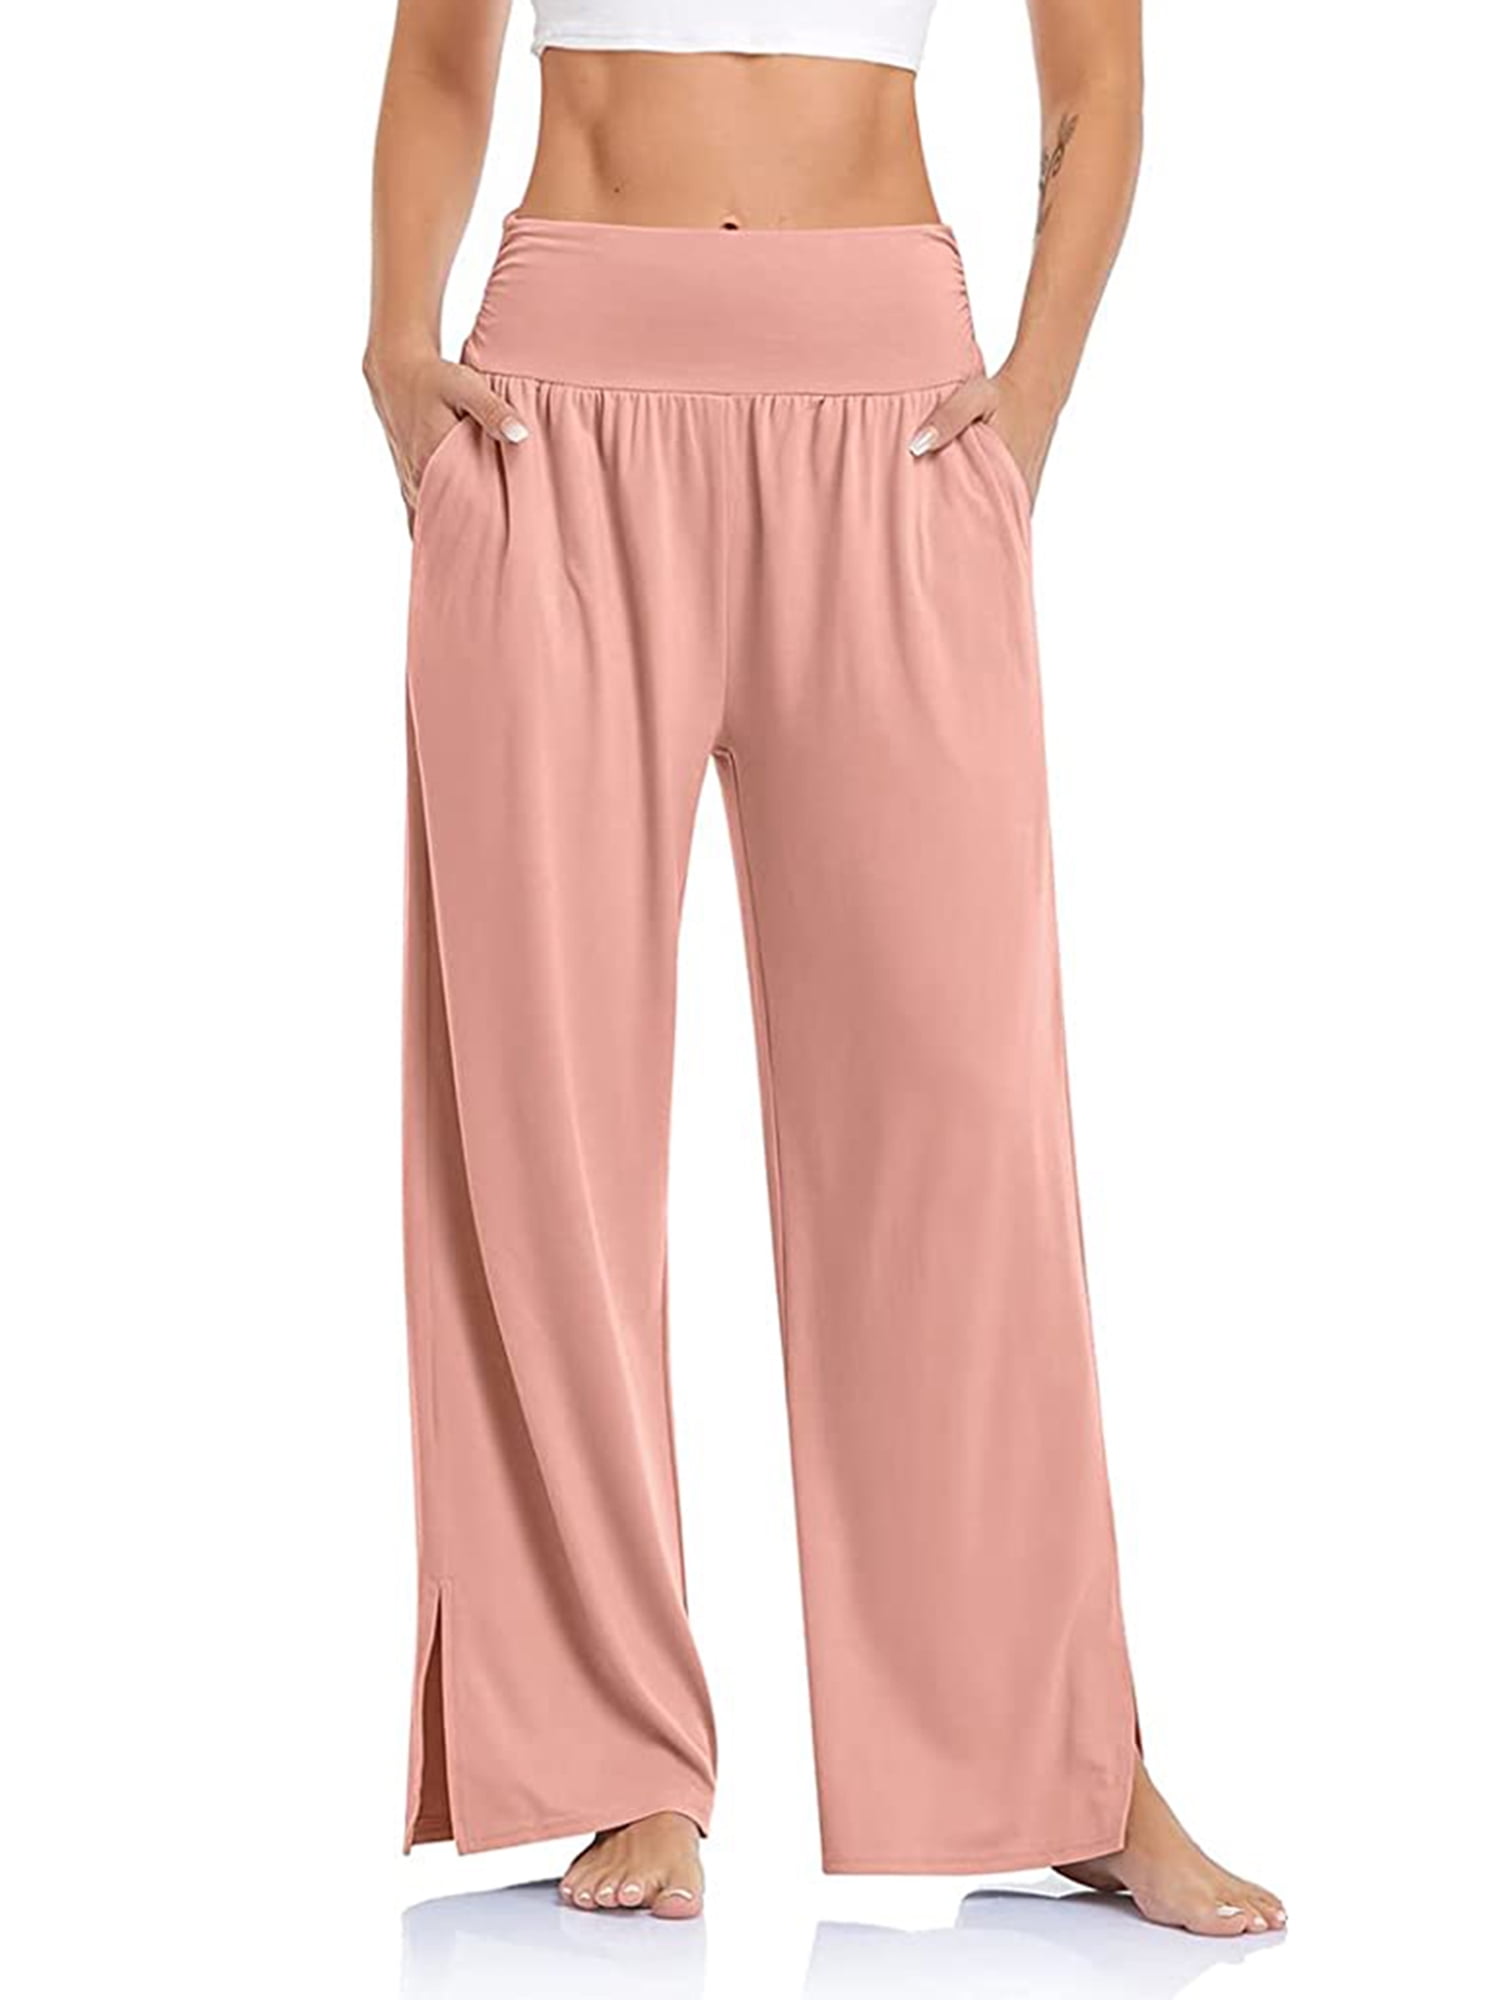 Shop Organic Cotton Yoga Pants for Women | High Waist With Pockets - Proyog